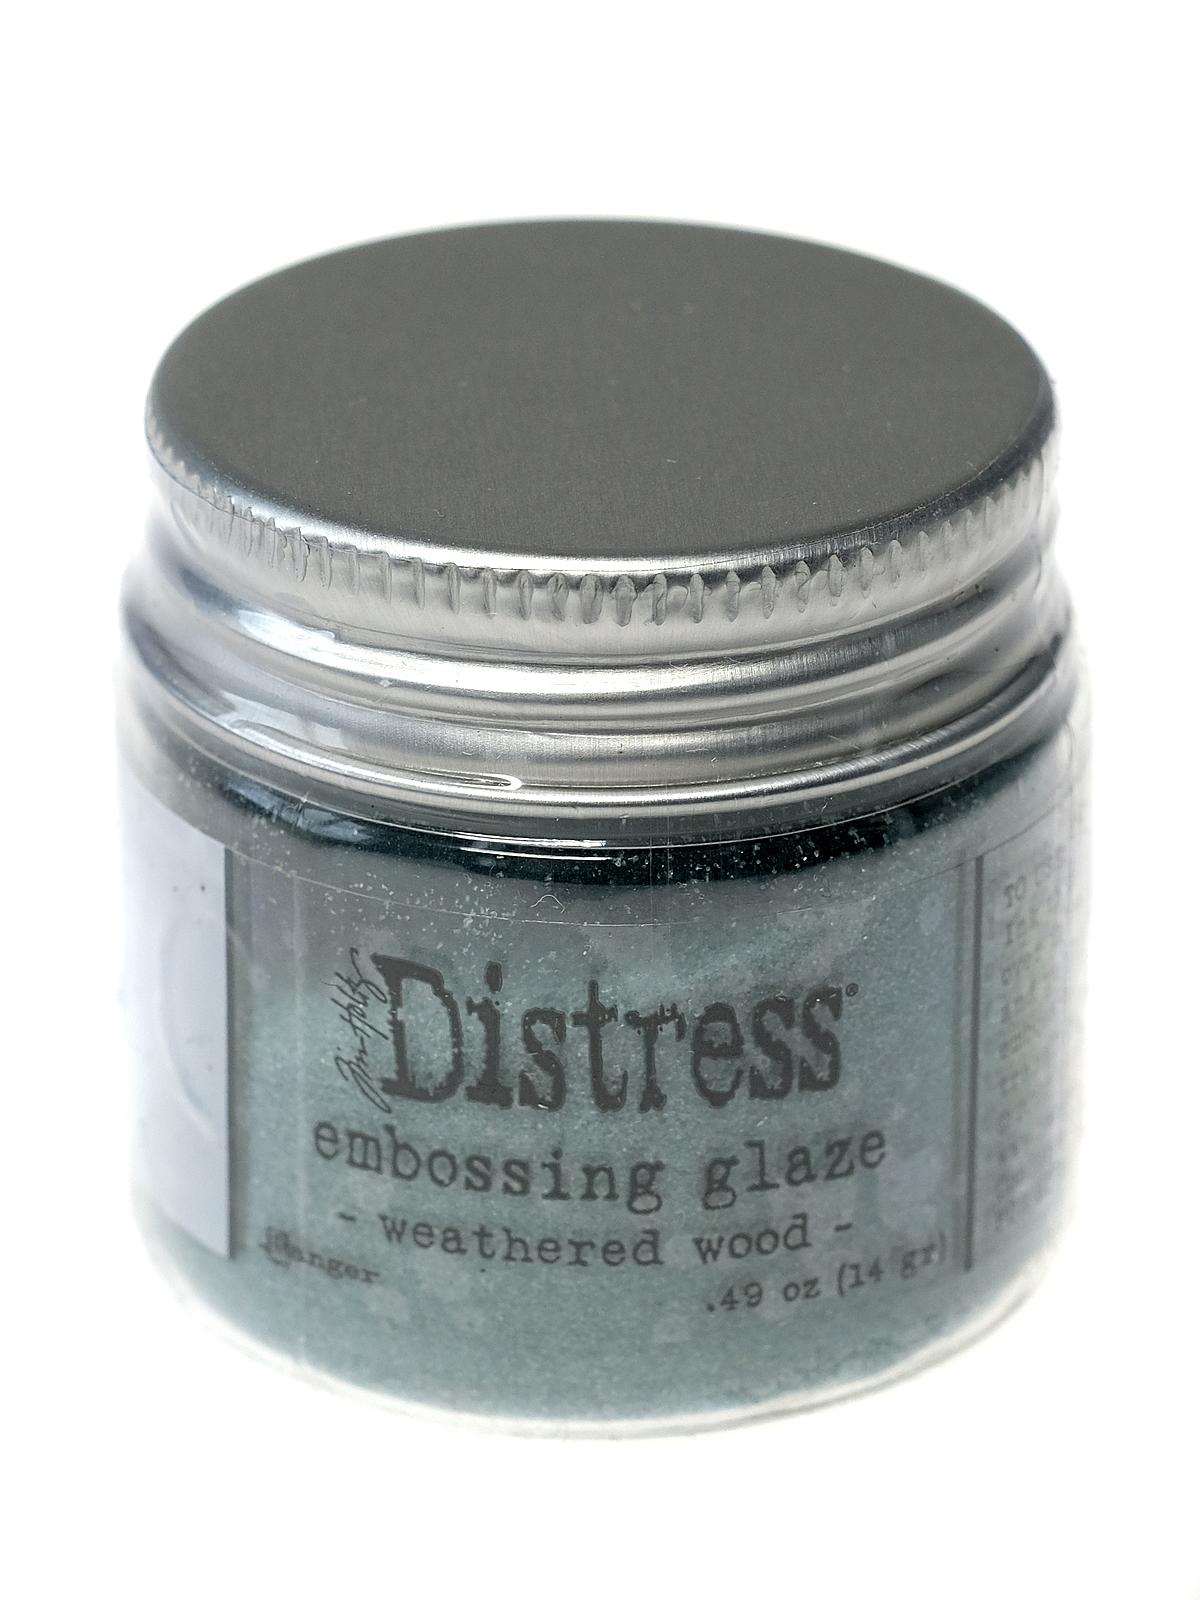 Tim Holtz Distress Embossing Glaze Weathered Wood 1 Oz. Jar